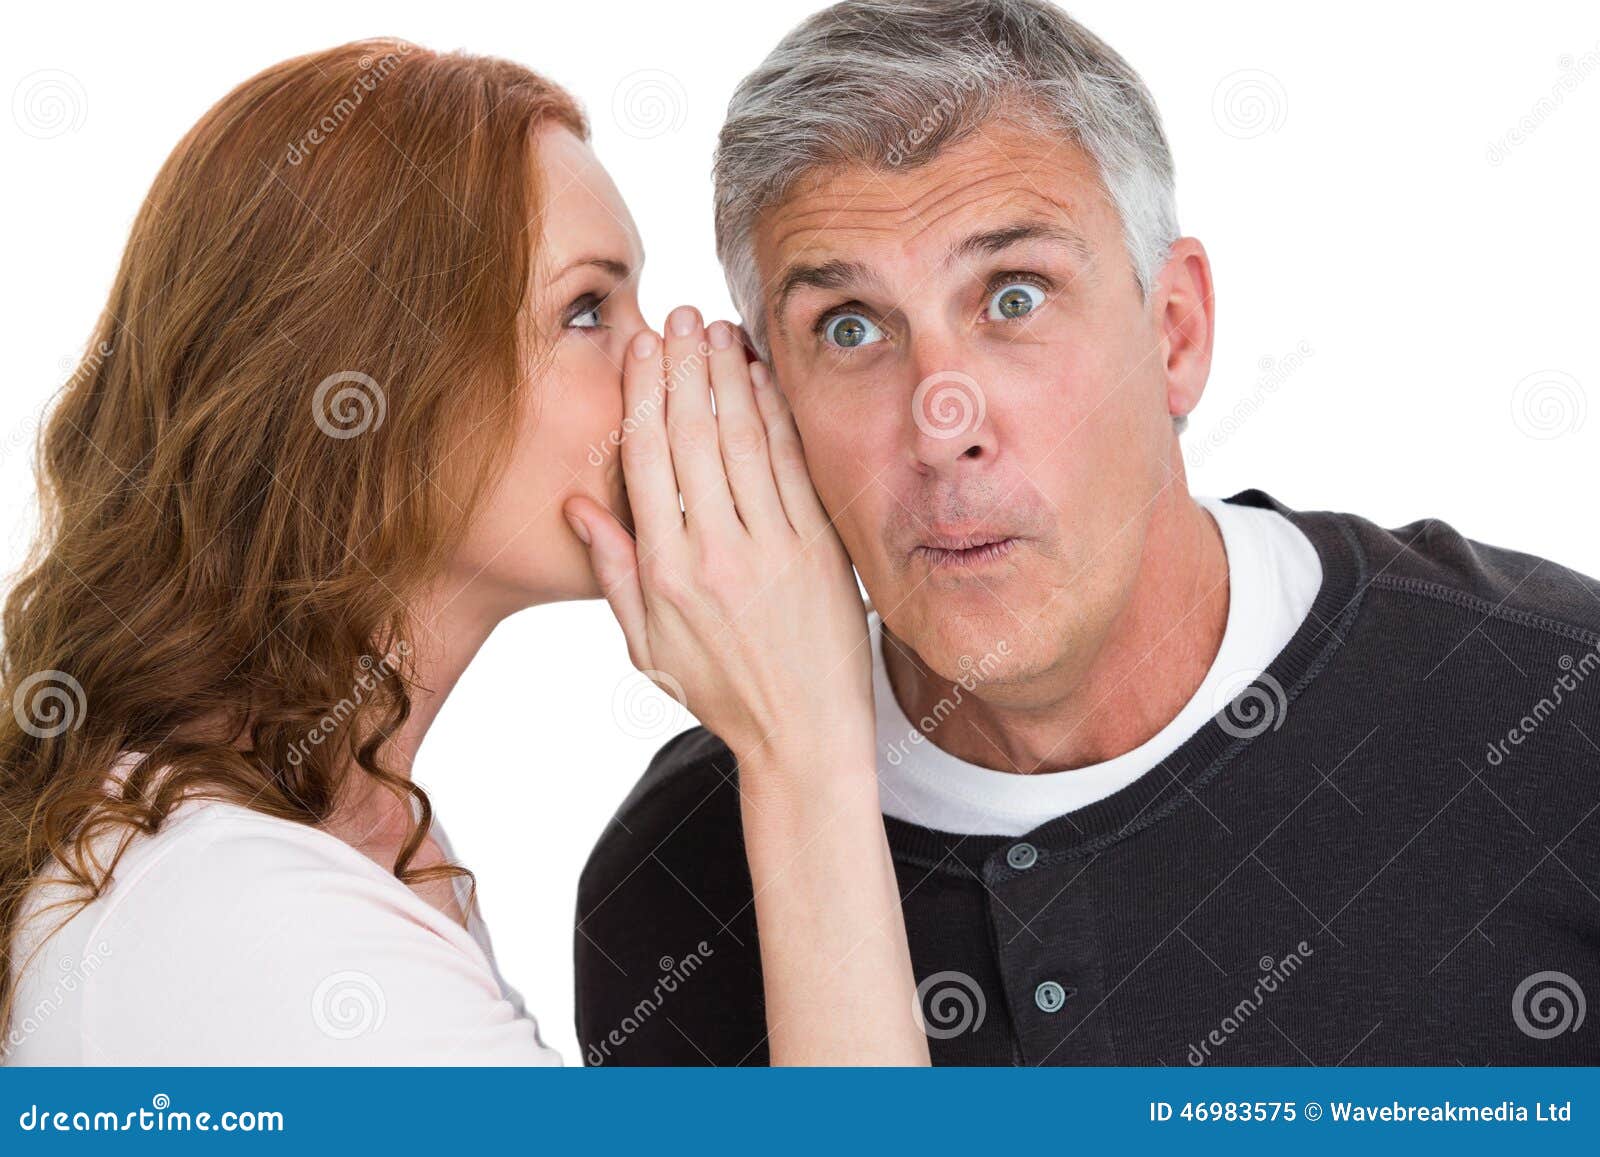 woman telling secret to her partner